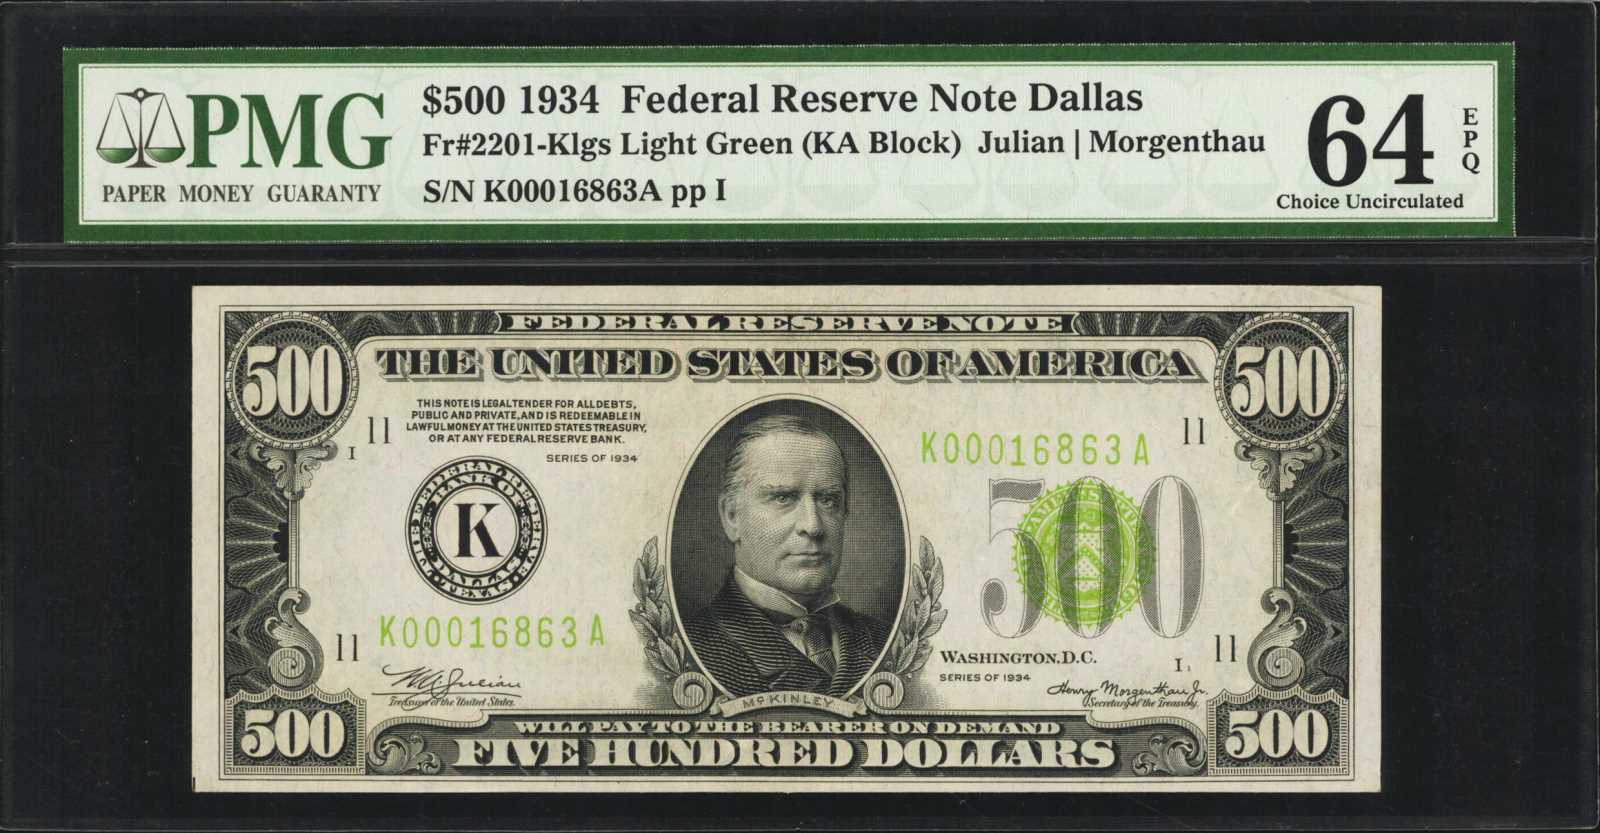 доллар сша 2006 года